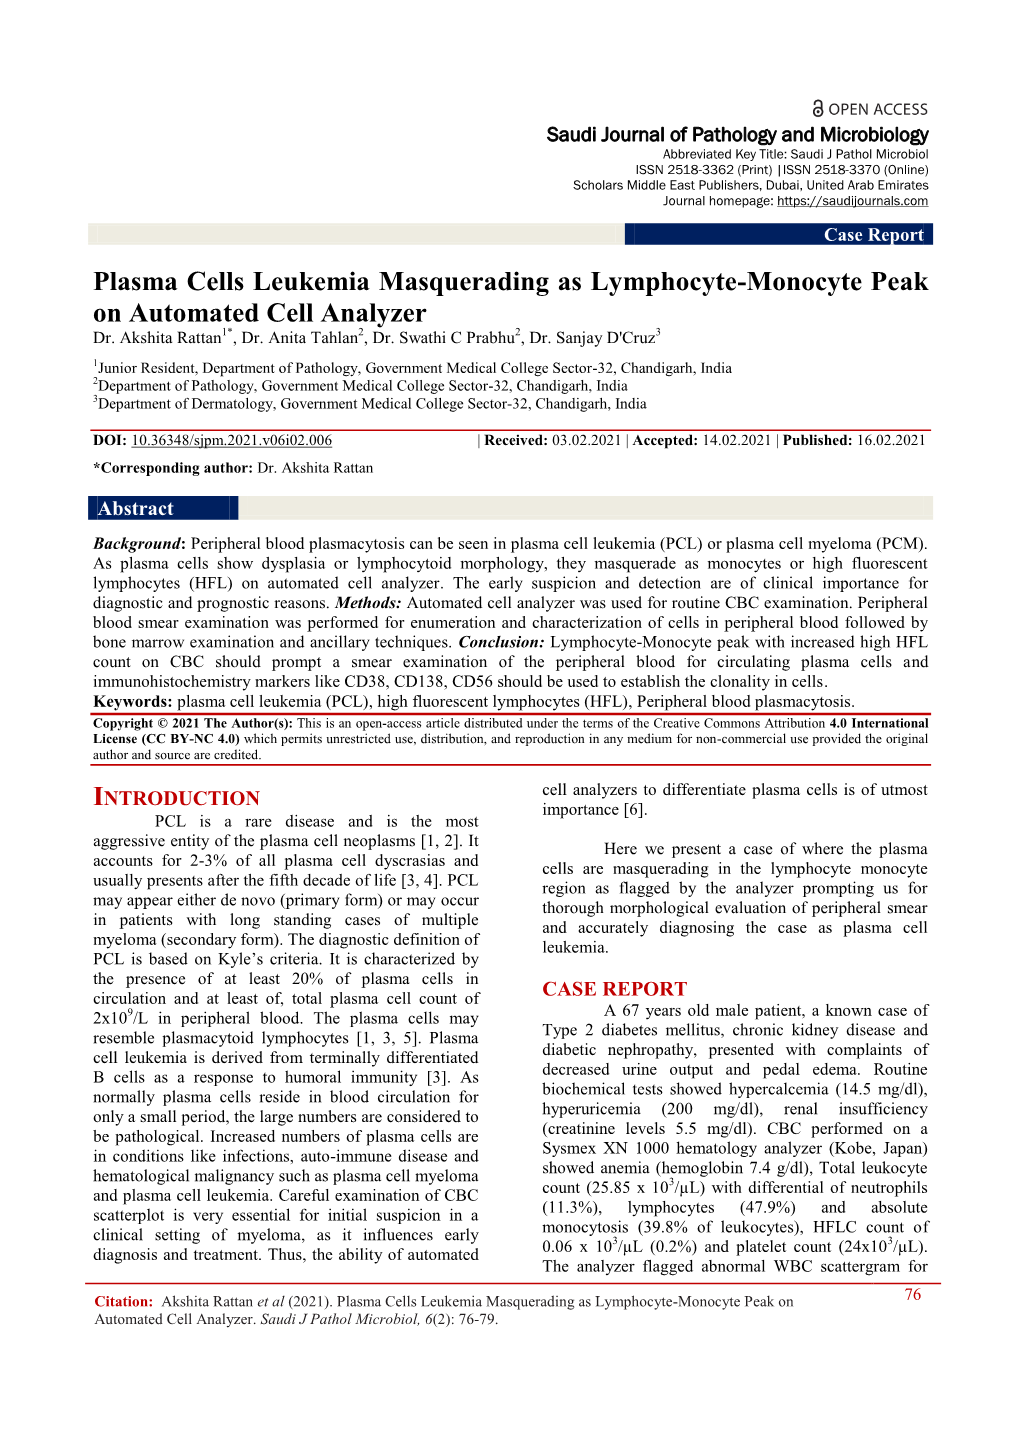 Plasma Cells Leukemia Masquerading As Lymphocyte-Monocyte Peak on Automated Cell Analyzer Dr